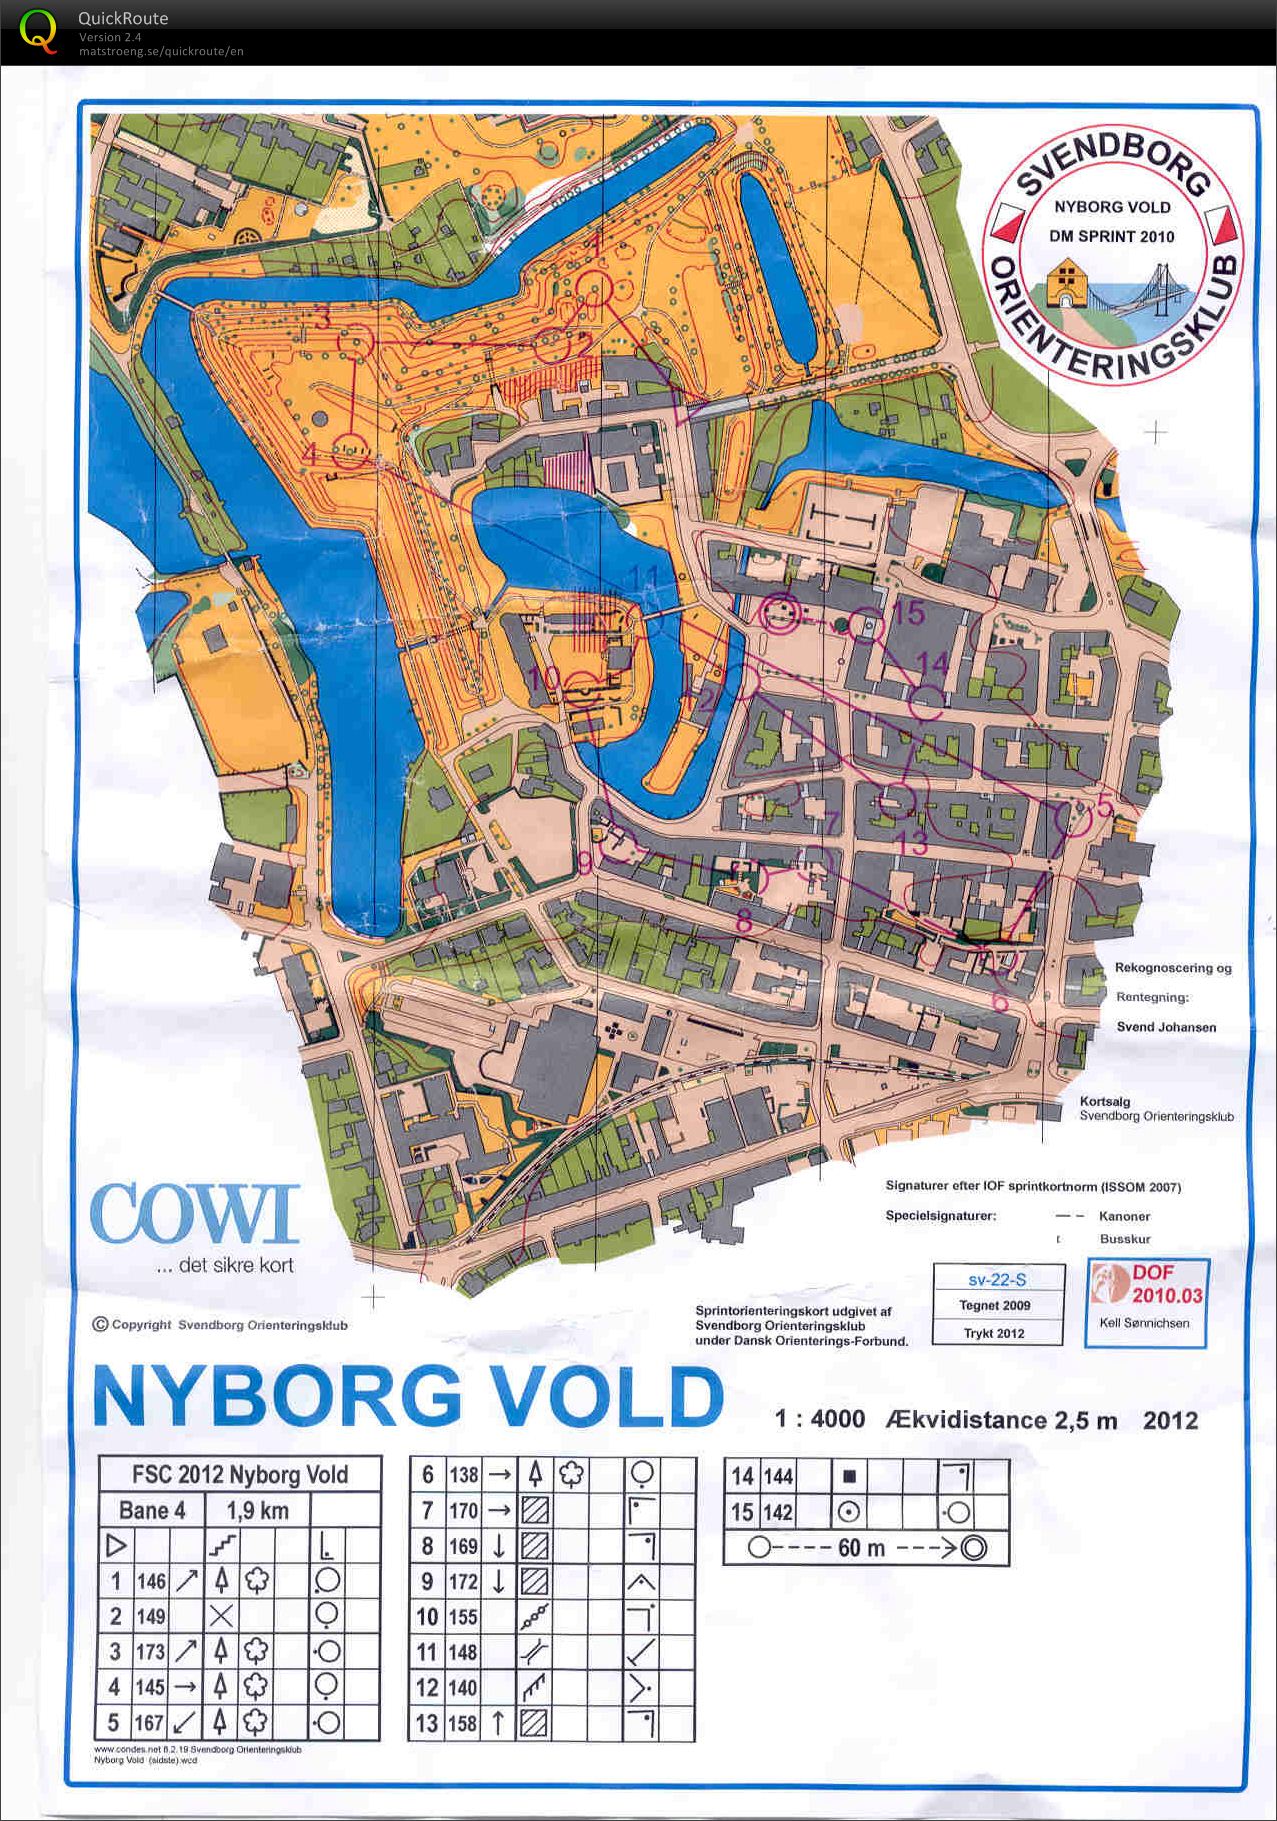 Nyborg Vold, Bane 4, D55, Pia Gade, 280512 (2012-05-28)